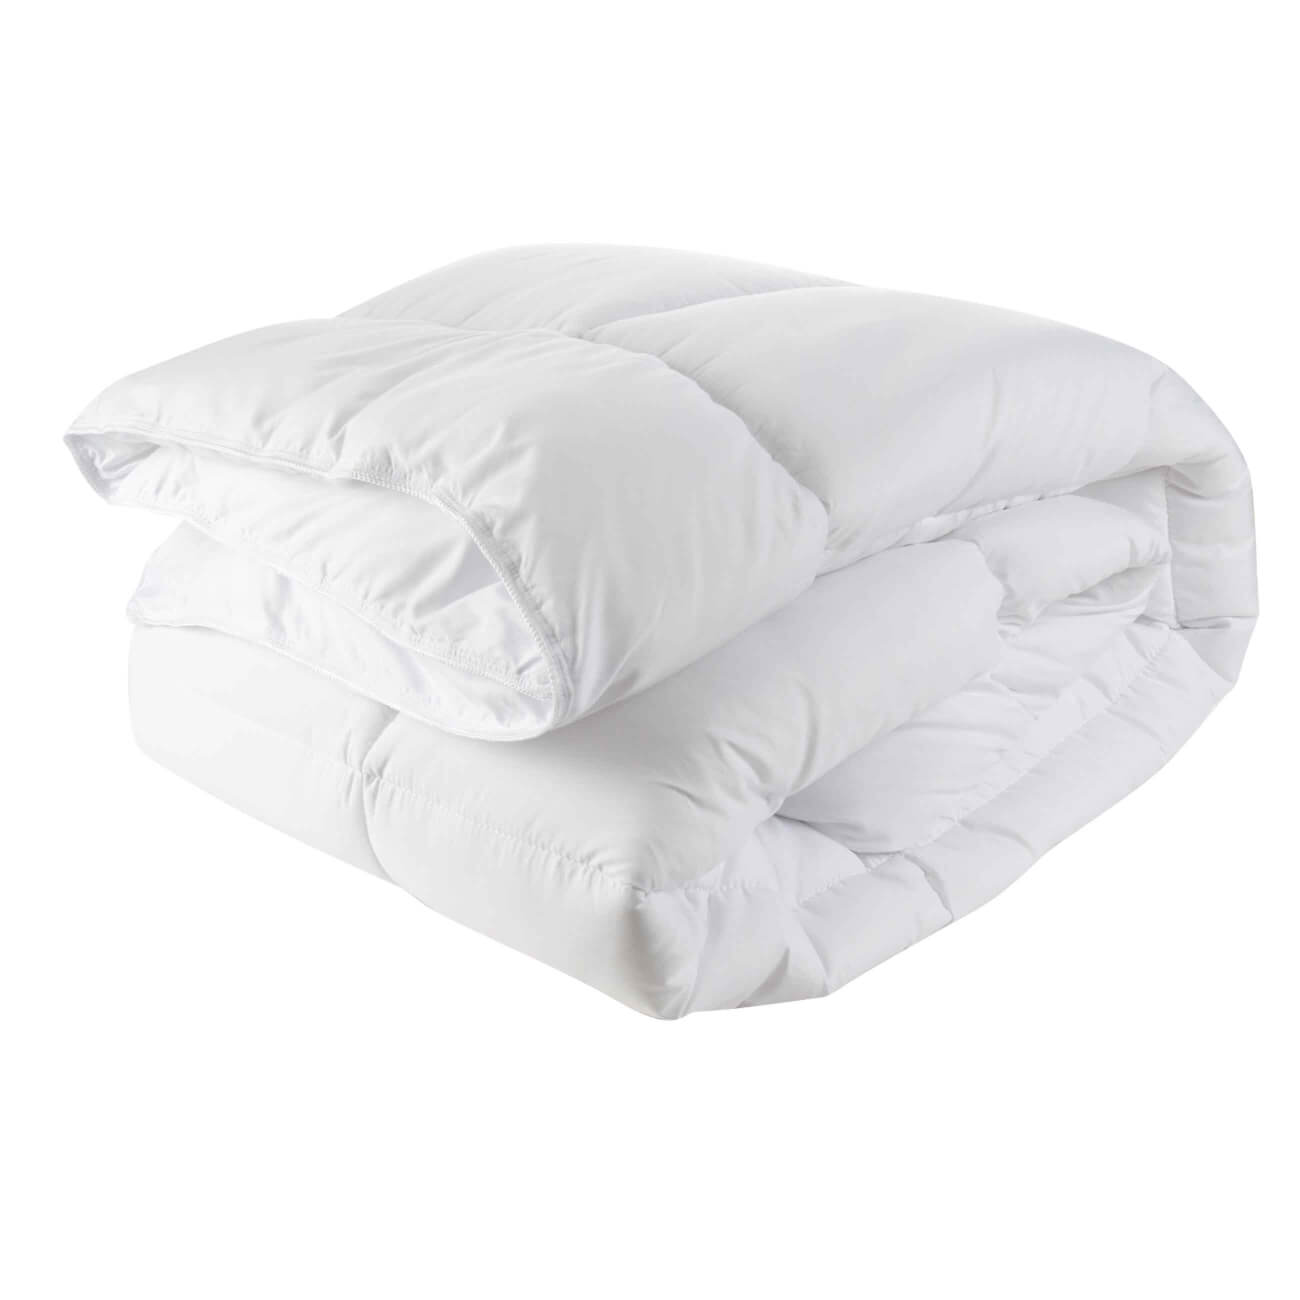 Одеяло, 140х200 см, микрофибра, Rest, Super soft - фото 1